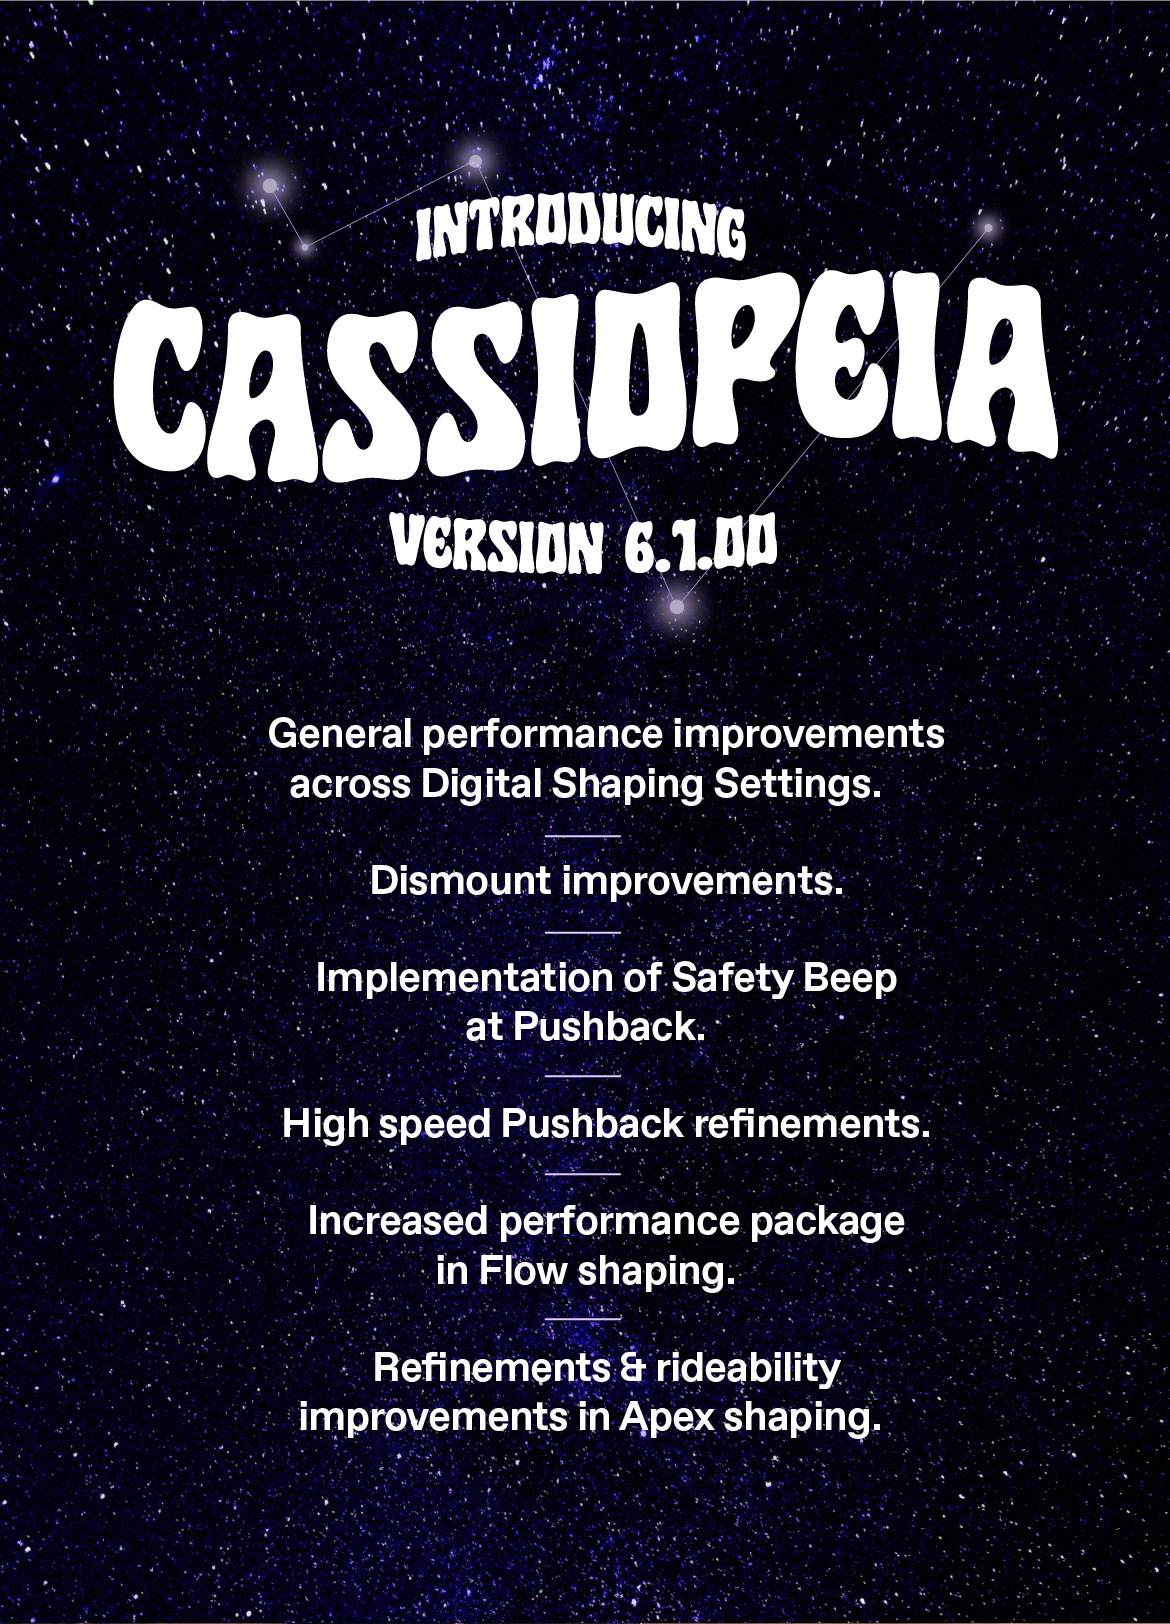 onewheel-gt-firmware-upgrade-app-cassiopeia-v6-funshop-vienna-austria